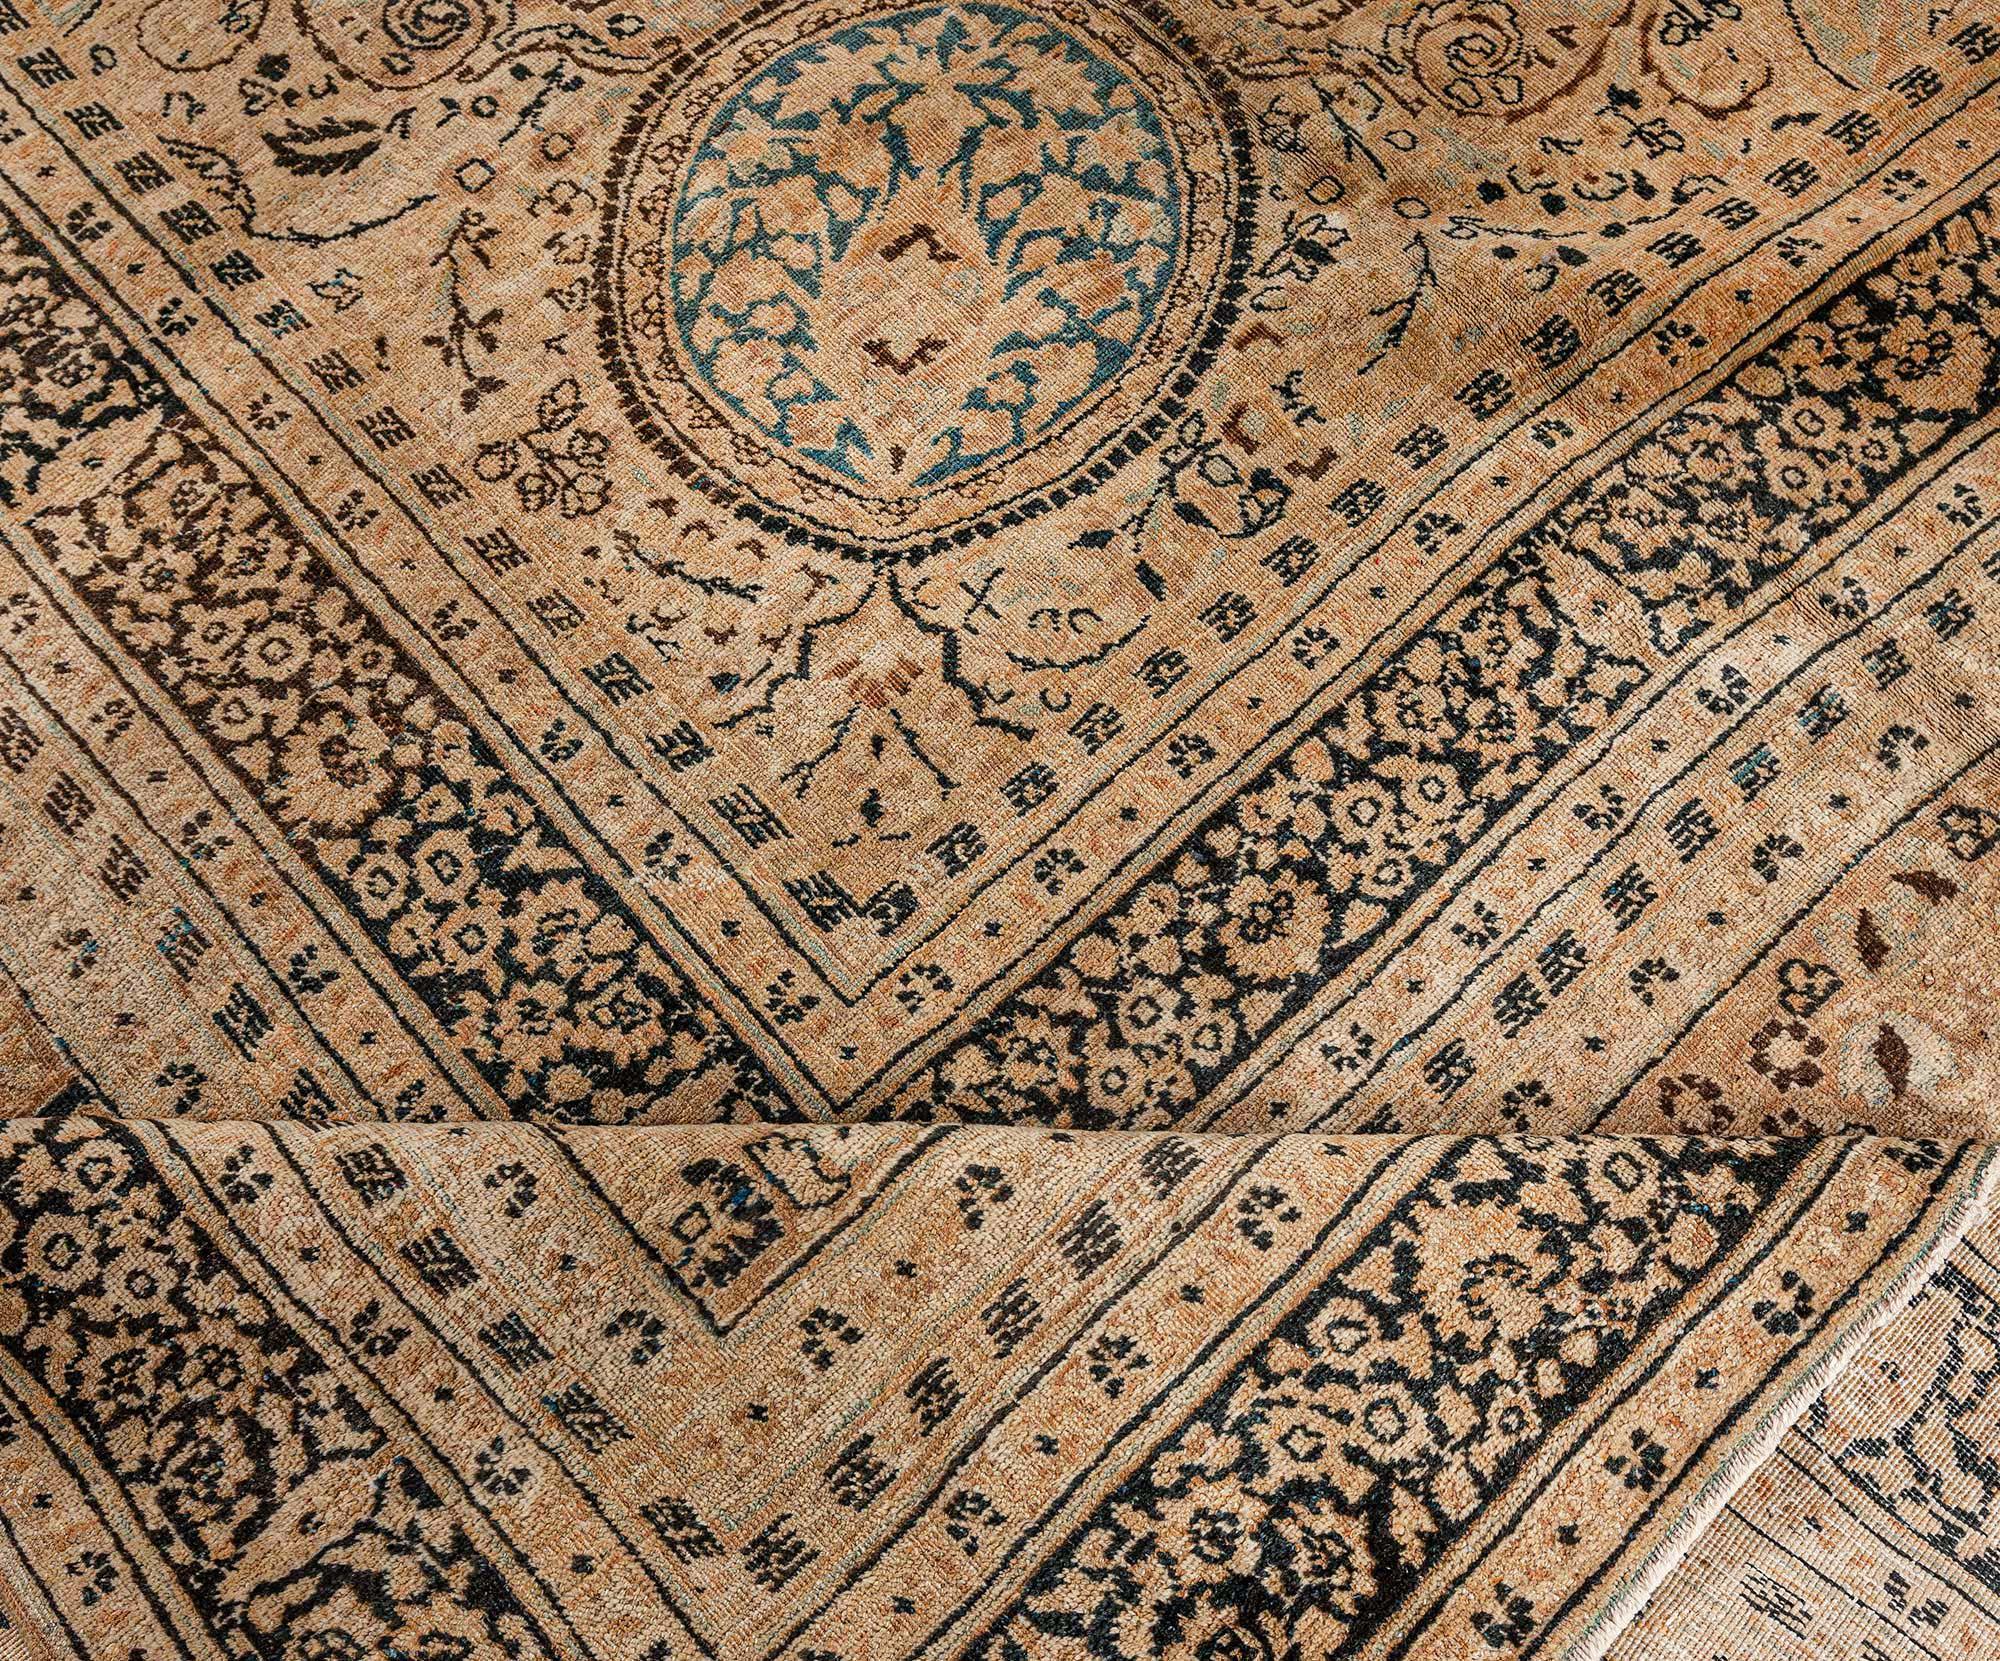 Antique Persian meshad handmade wool rug
Size: 12'3